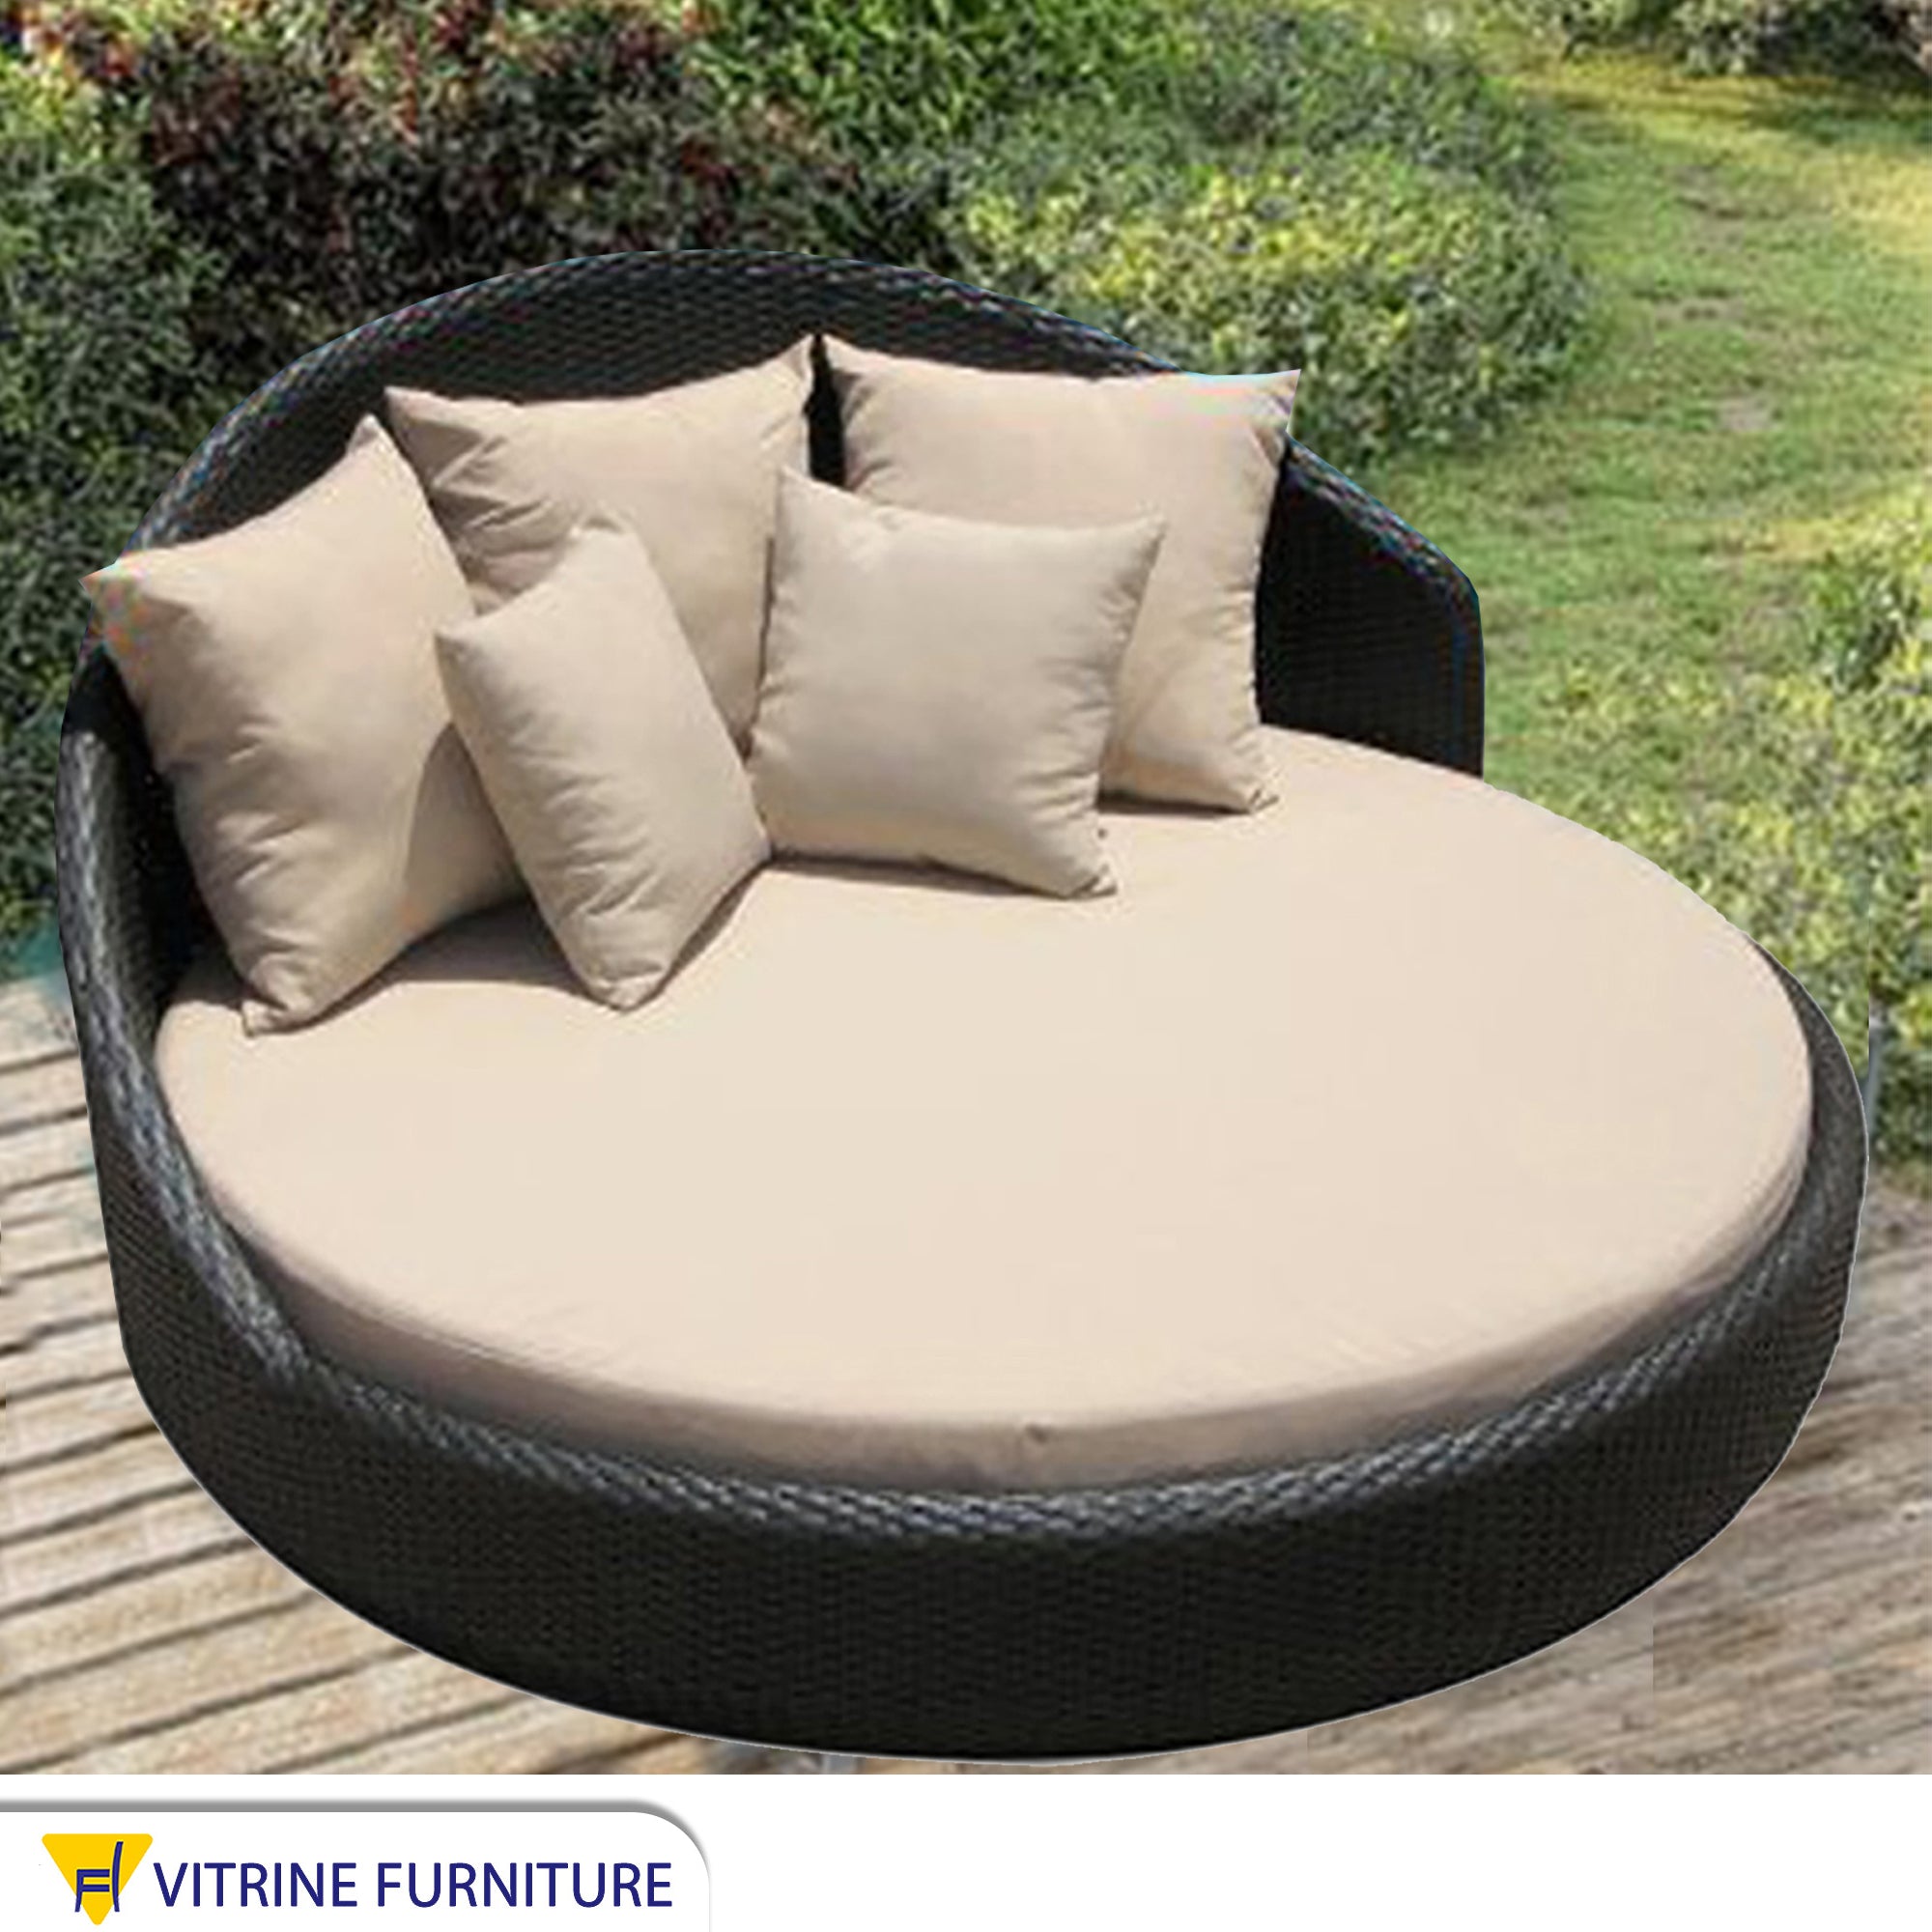 Round rattan sun bed with half high backrest